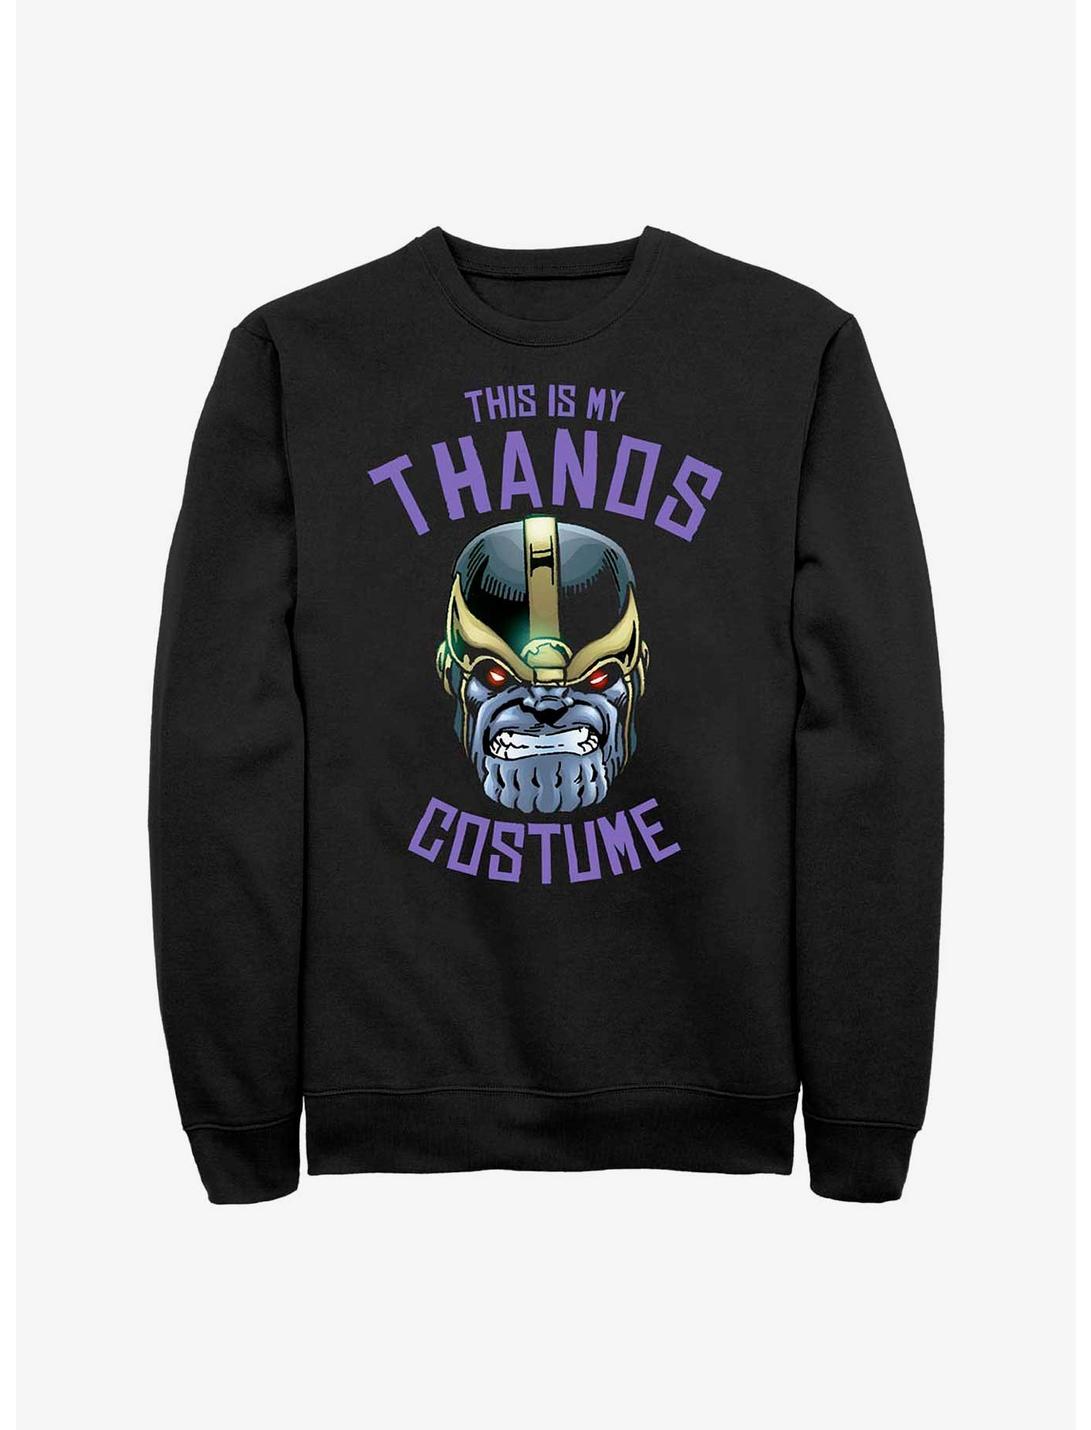 Marvel Avengers This Is My Thanos Costume Sweatshirt, BLACK, hi-res